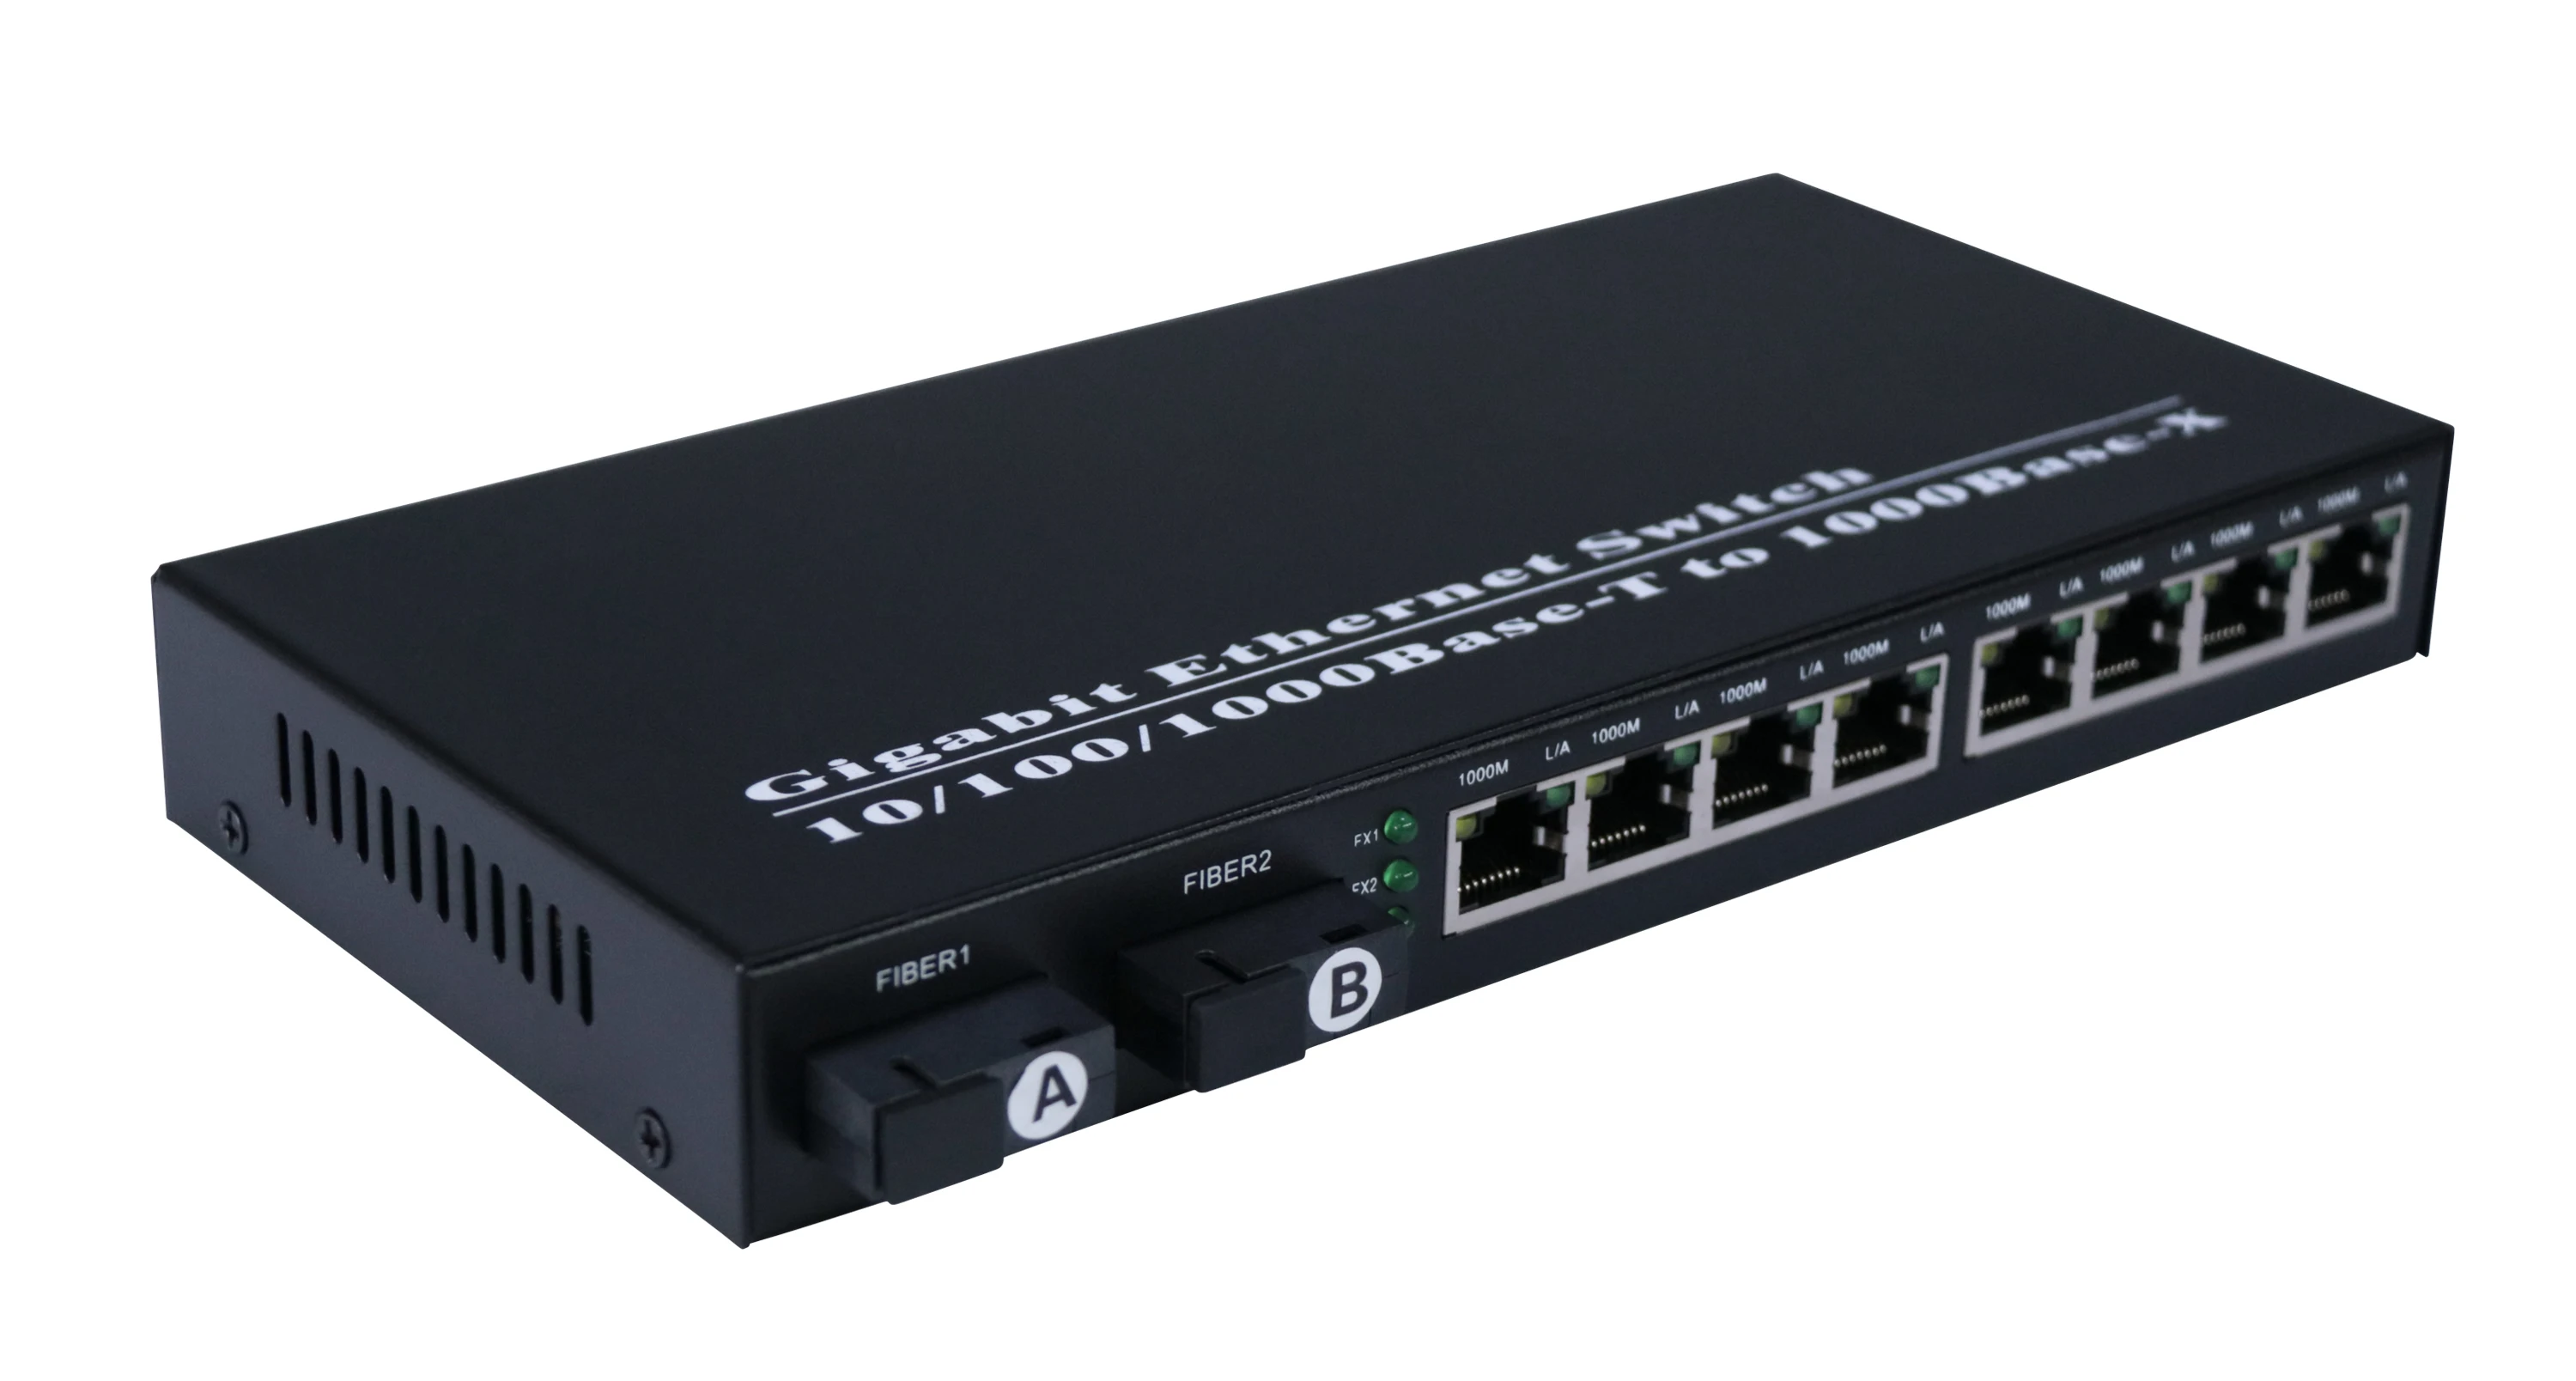 Làn Gigabit Optical Fiber 8 RJ45 Port 5v Lìonra Switch Router Switch Ethernet a-muigh